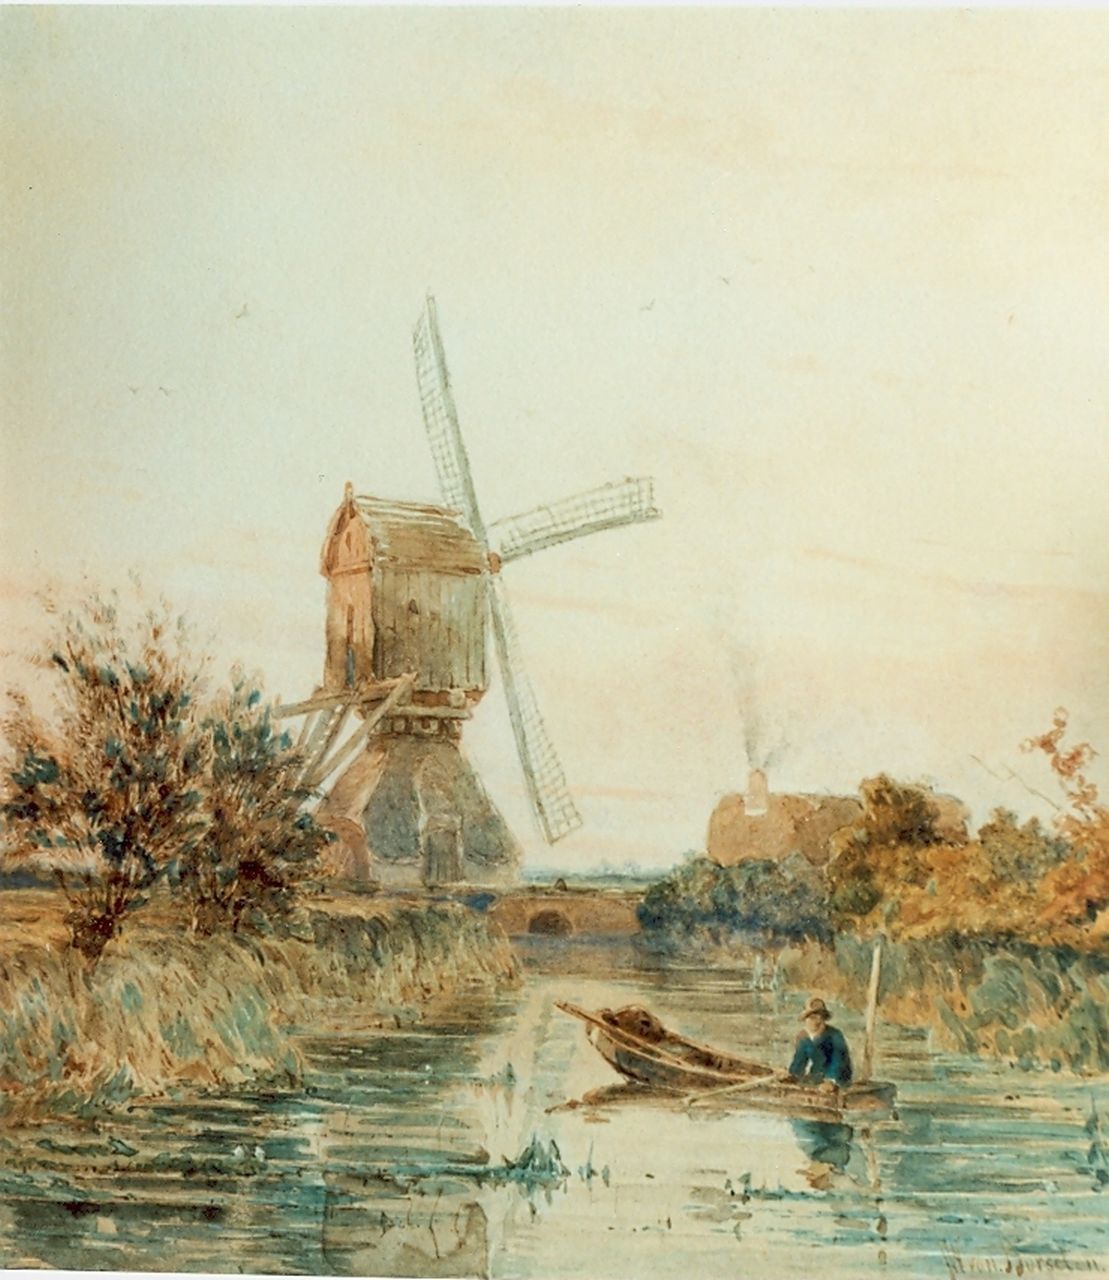 Borselen J.W. van | Jan Willem van Borselen, A polder landscape, Aquarell auf Papier 22,0 x 21,0 cm, signed l.r. und dated 1861